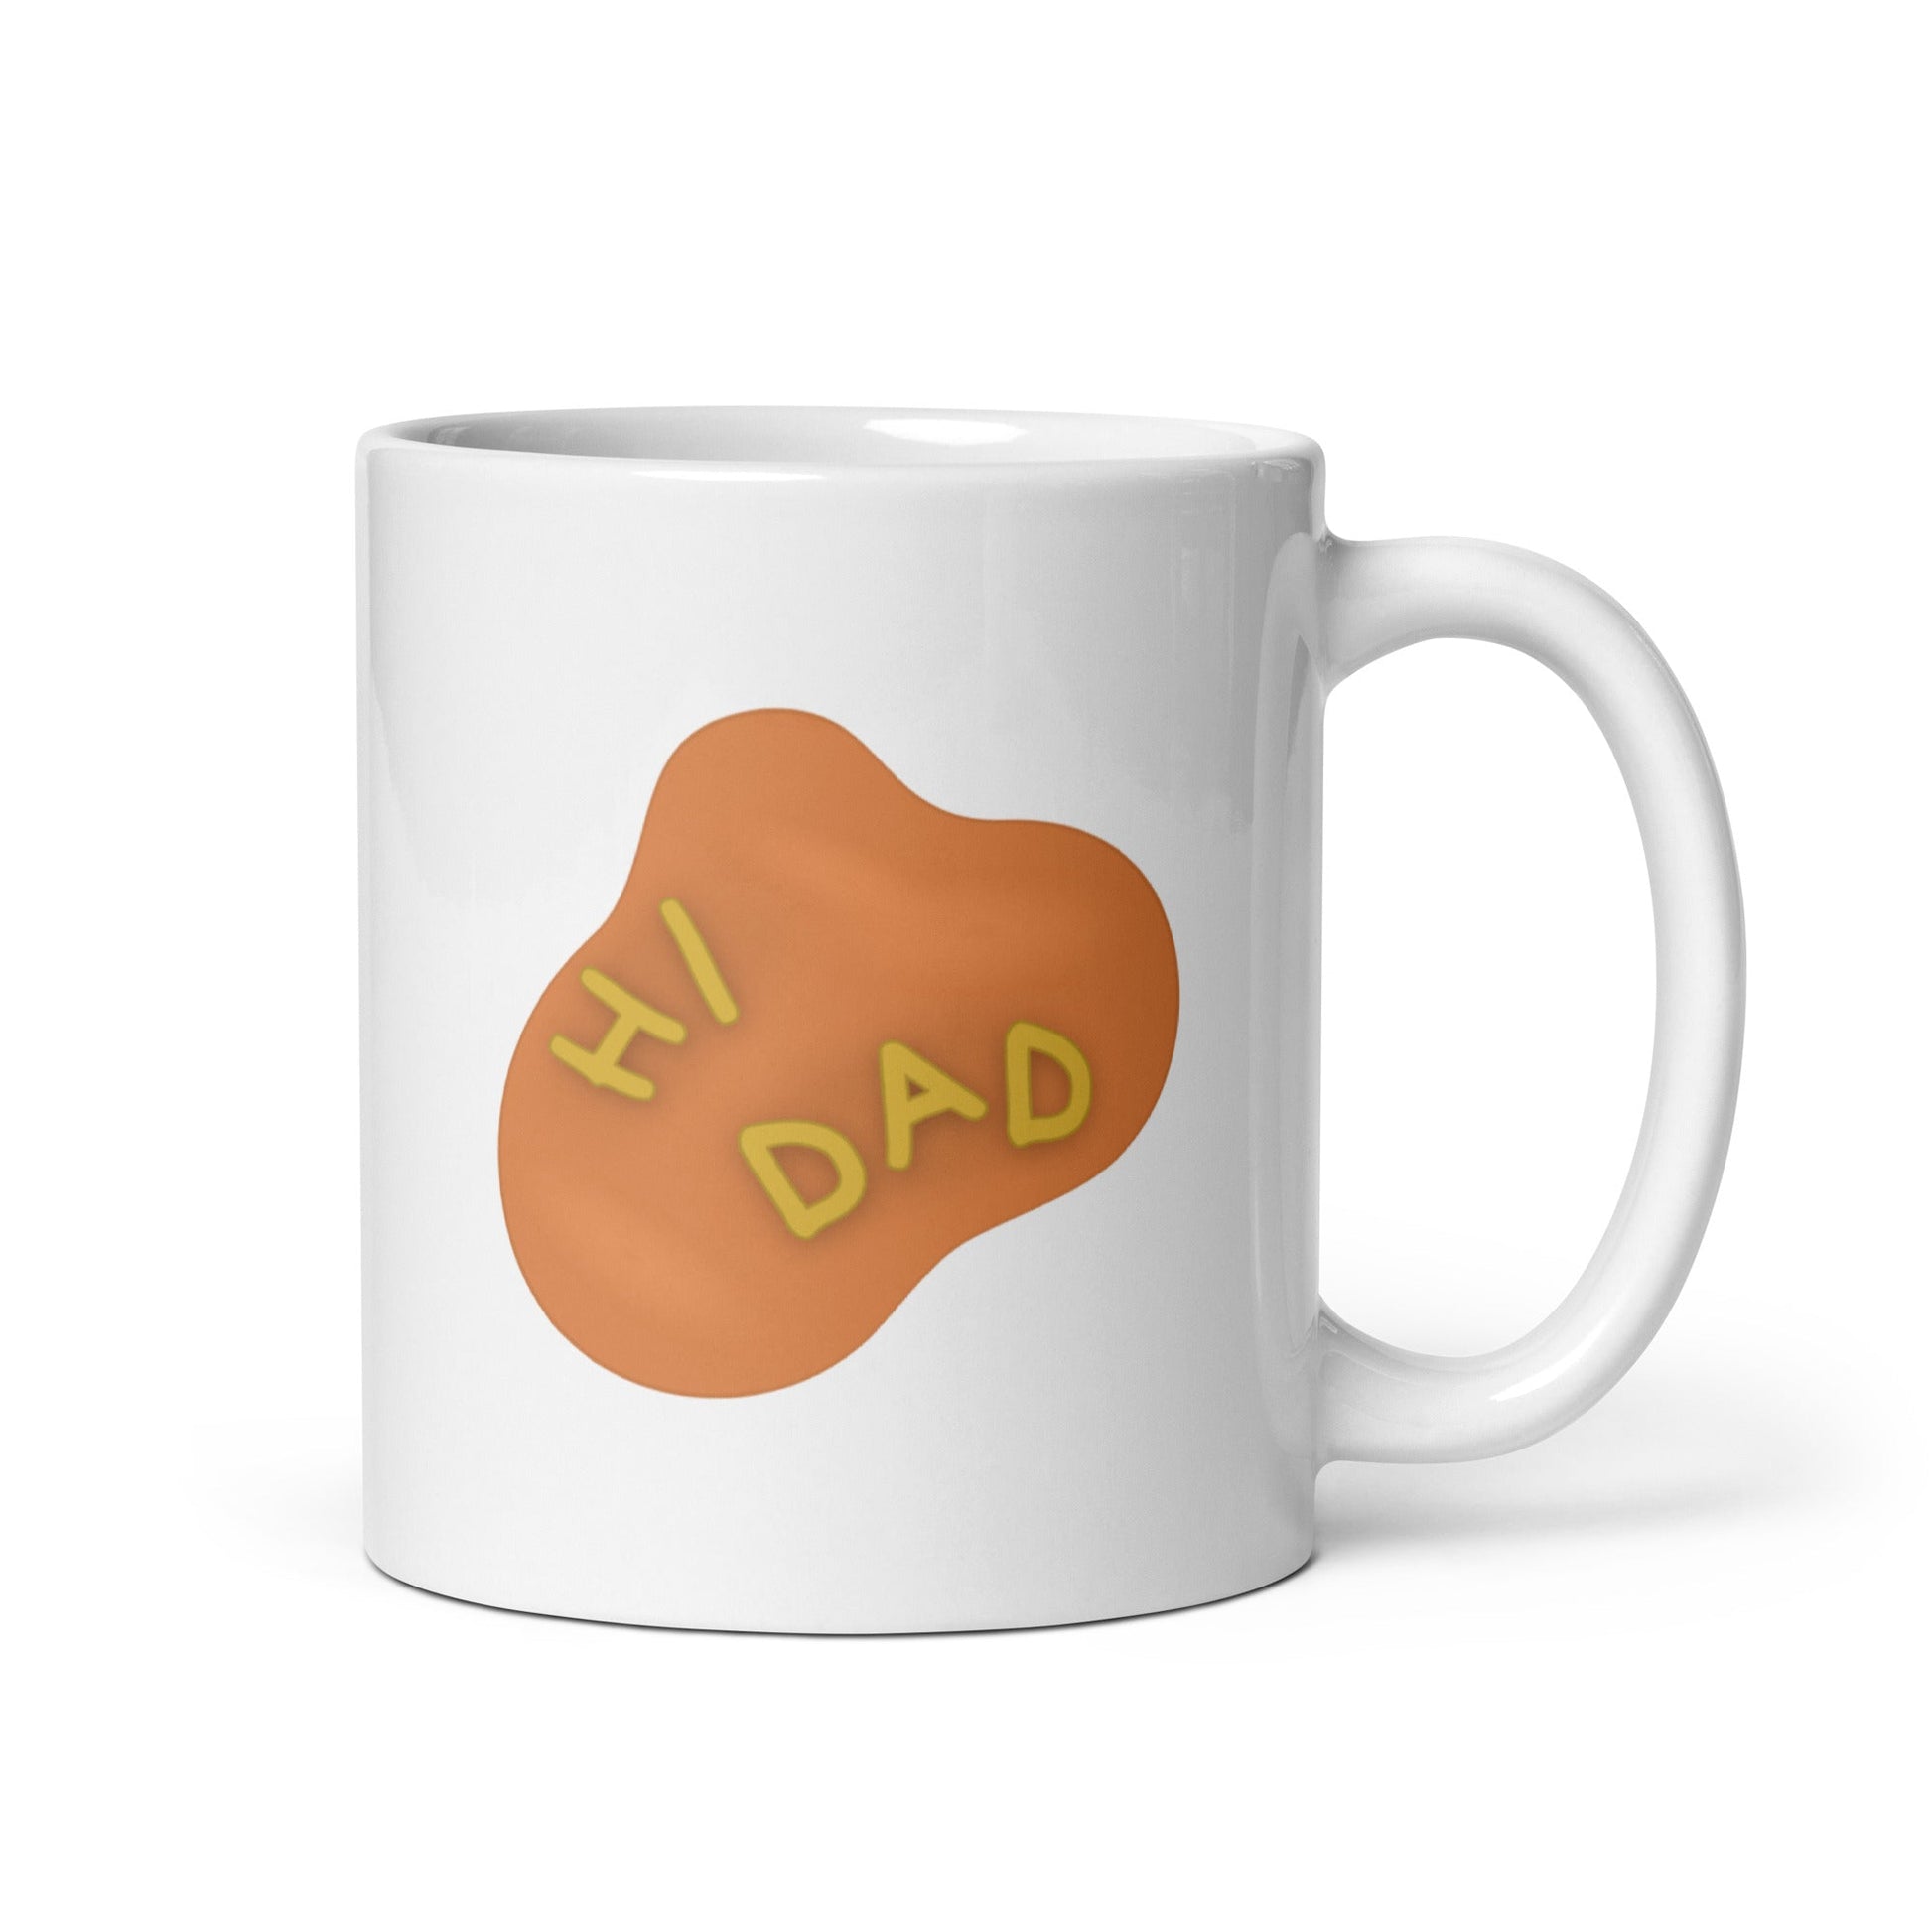 Hi Dad Soup White glossy mug christmas giftcoffee mugLittle Lady Shay Boutique